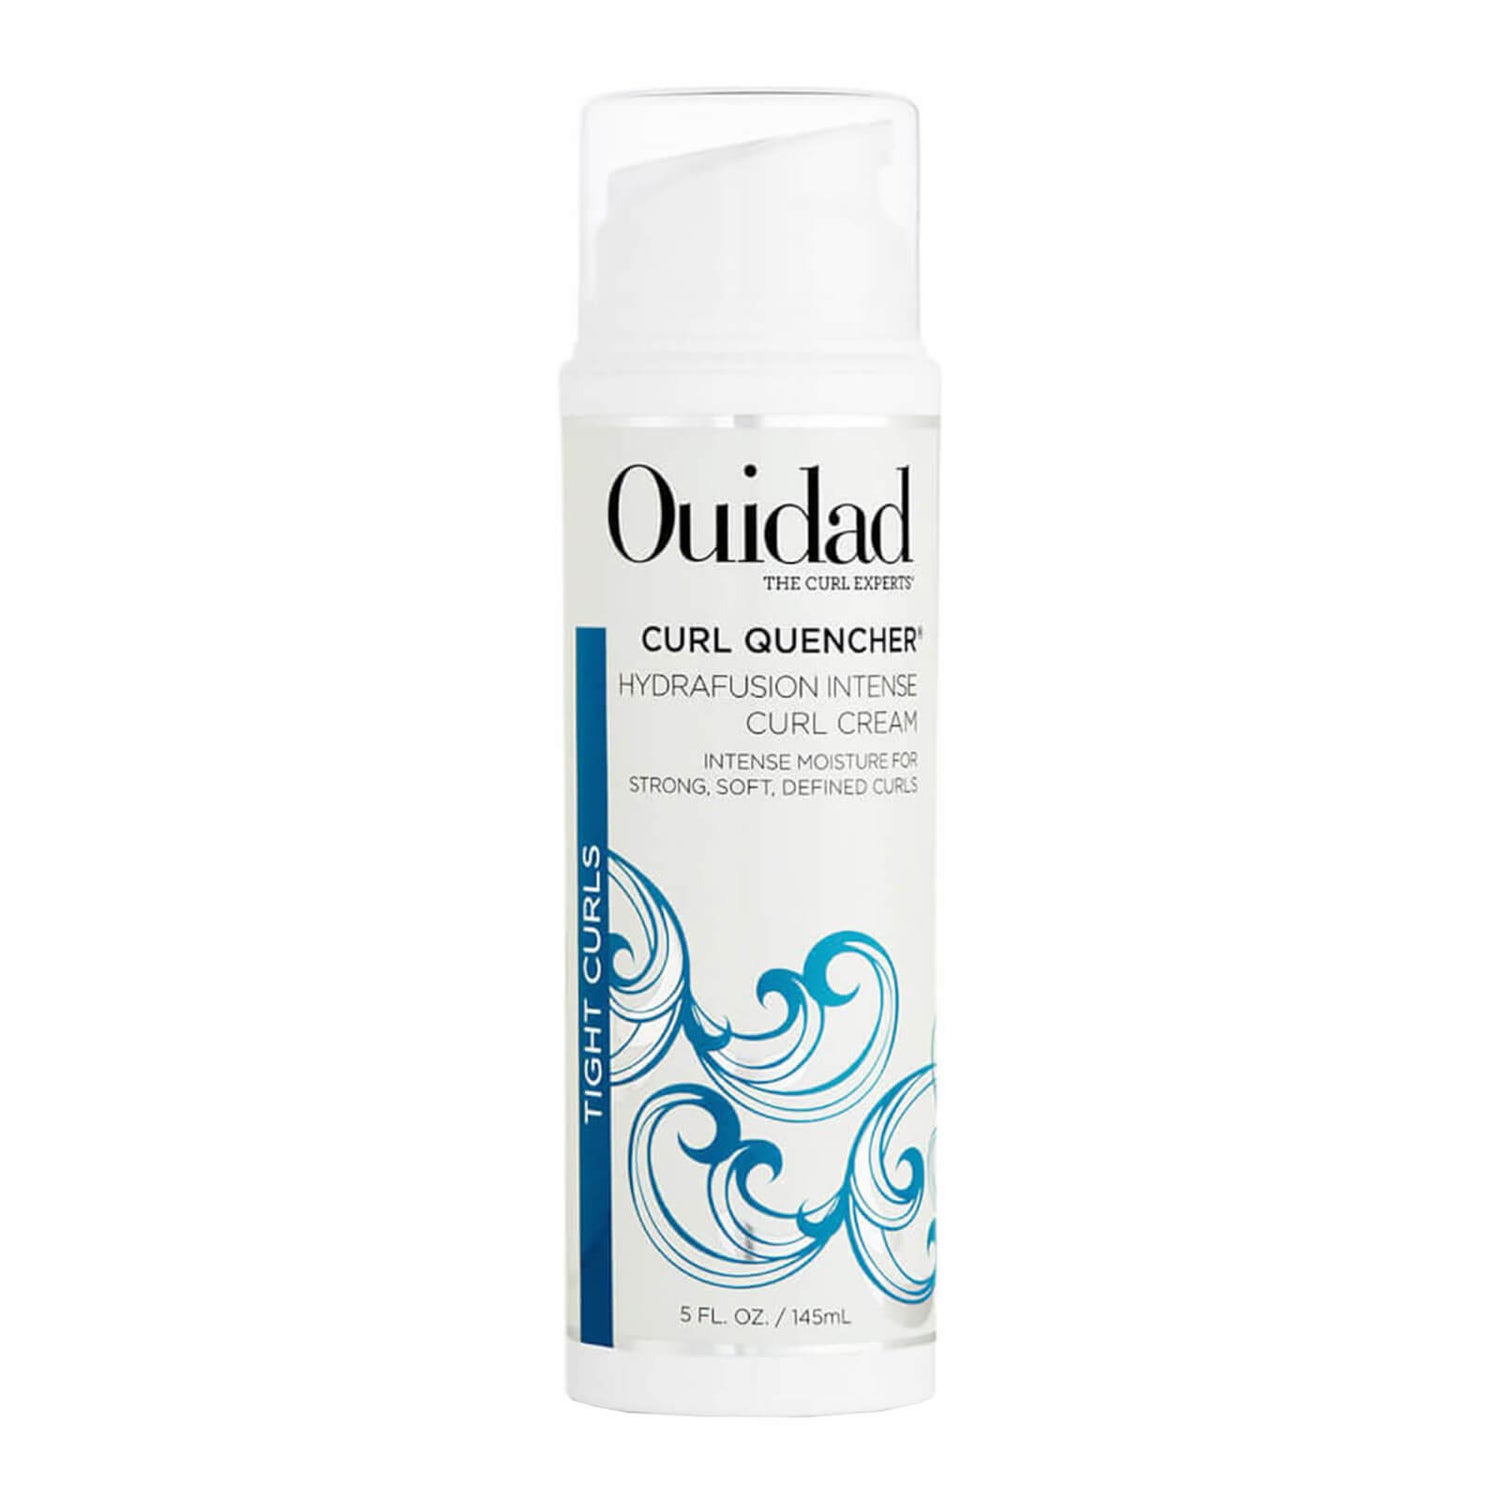 Ouidad Curl Quencher Hydrafusion Intense Curl Cream (5 fl. oz.)